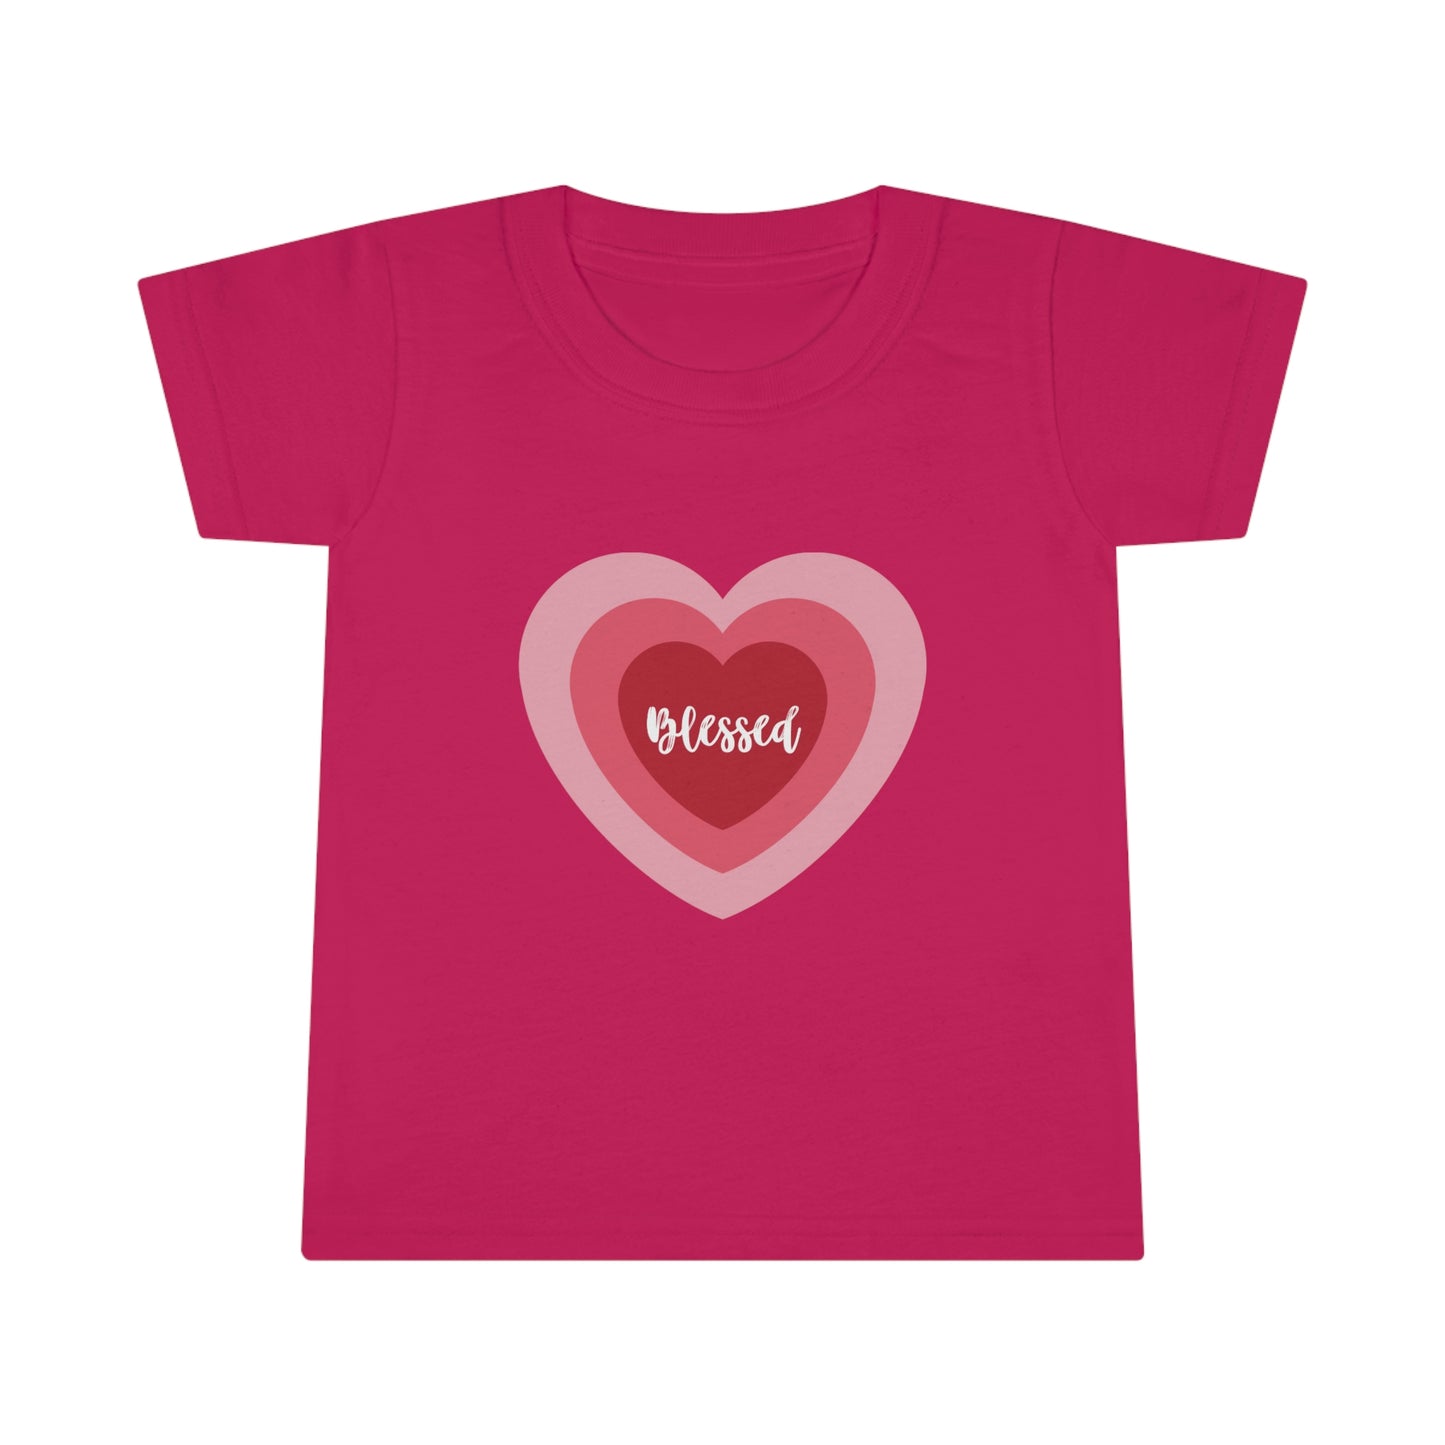 Blessed Heart - Toddler T-shirt